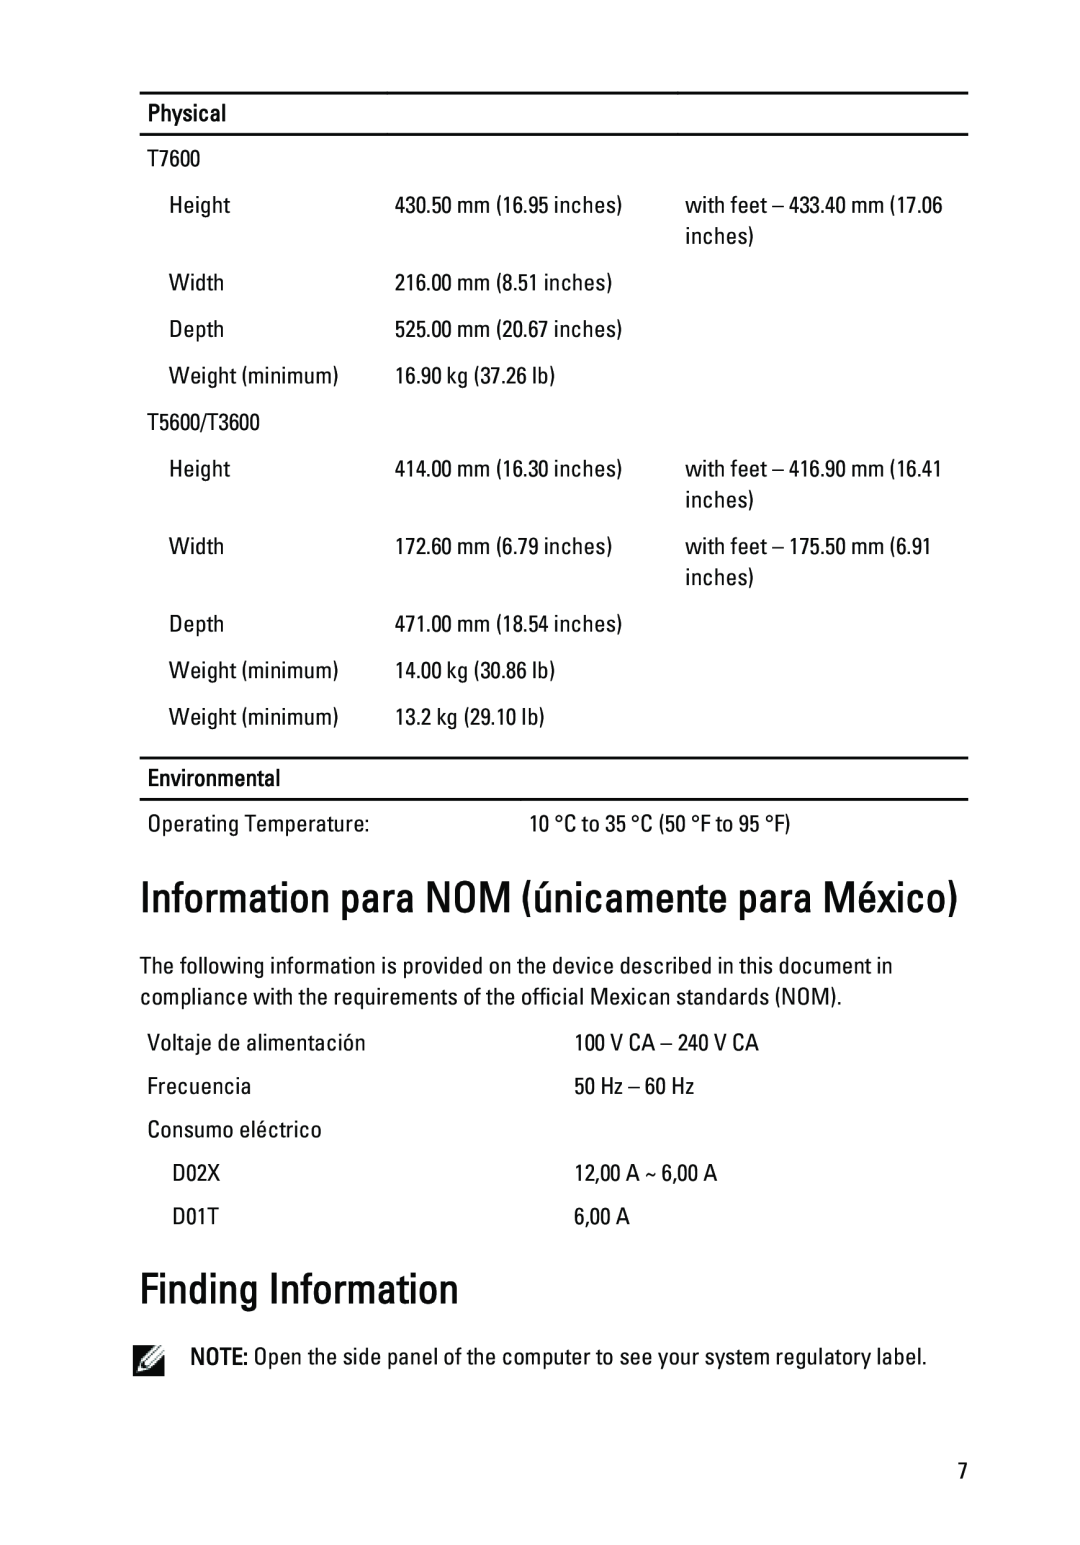 Dell t3600/t5600 manual Information para NOM únicamente para México, Finding Information, Physical, Environmental 